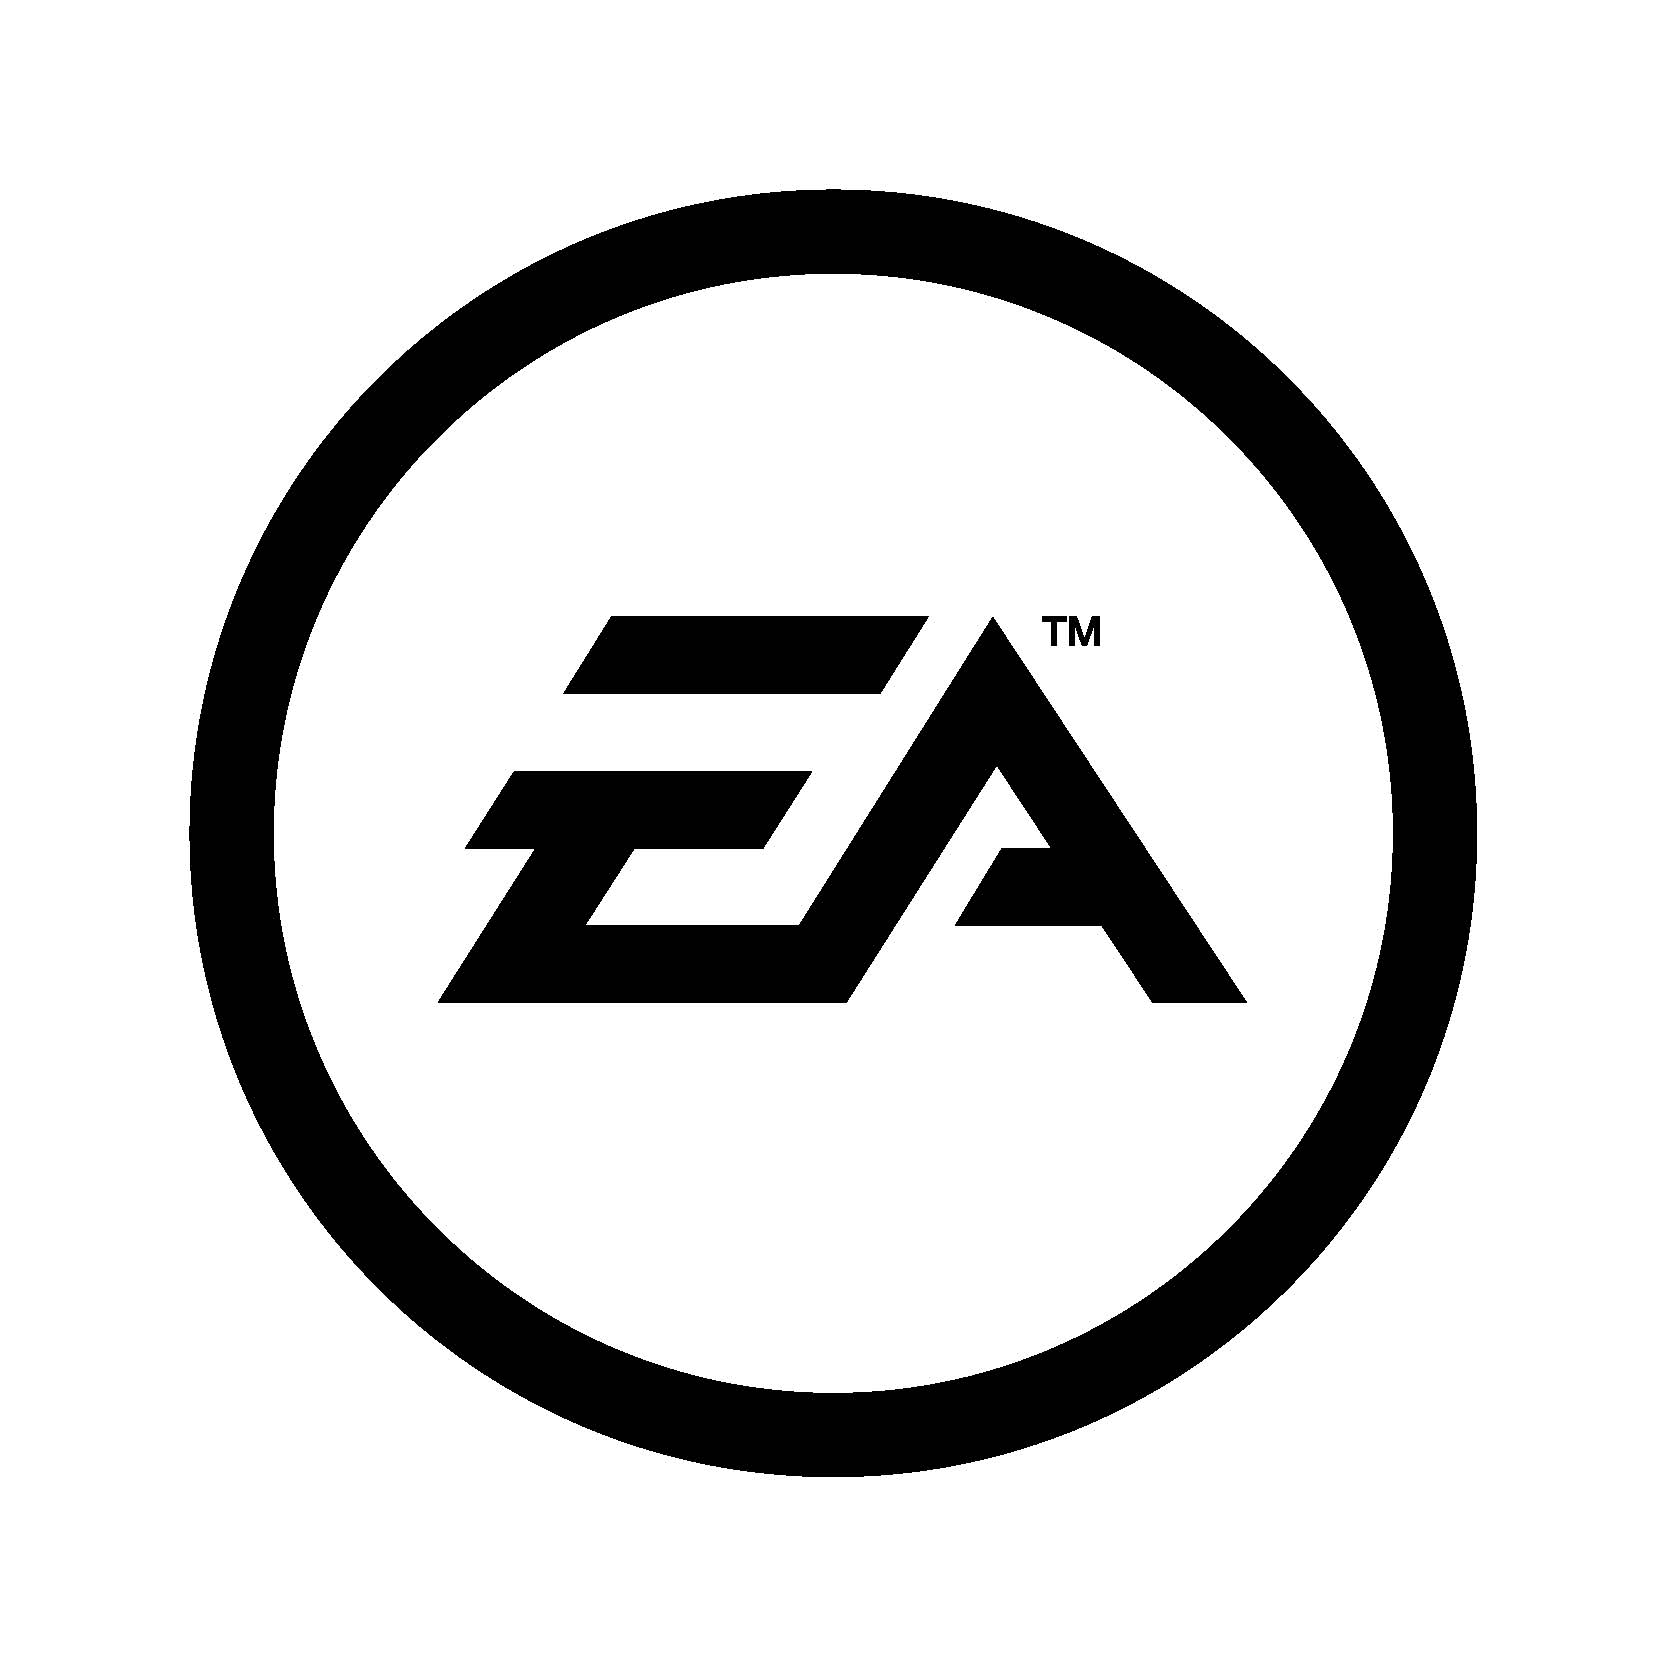 EA shares